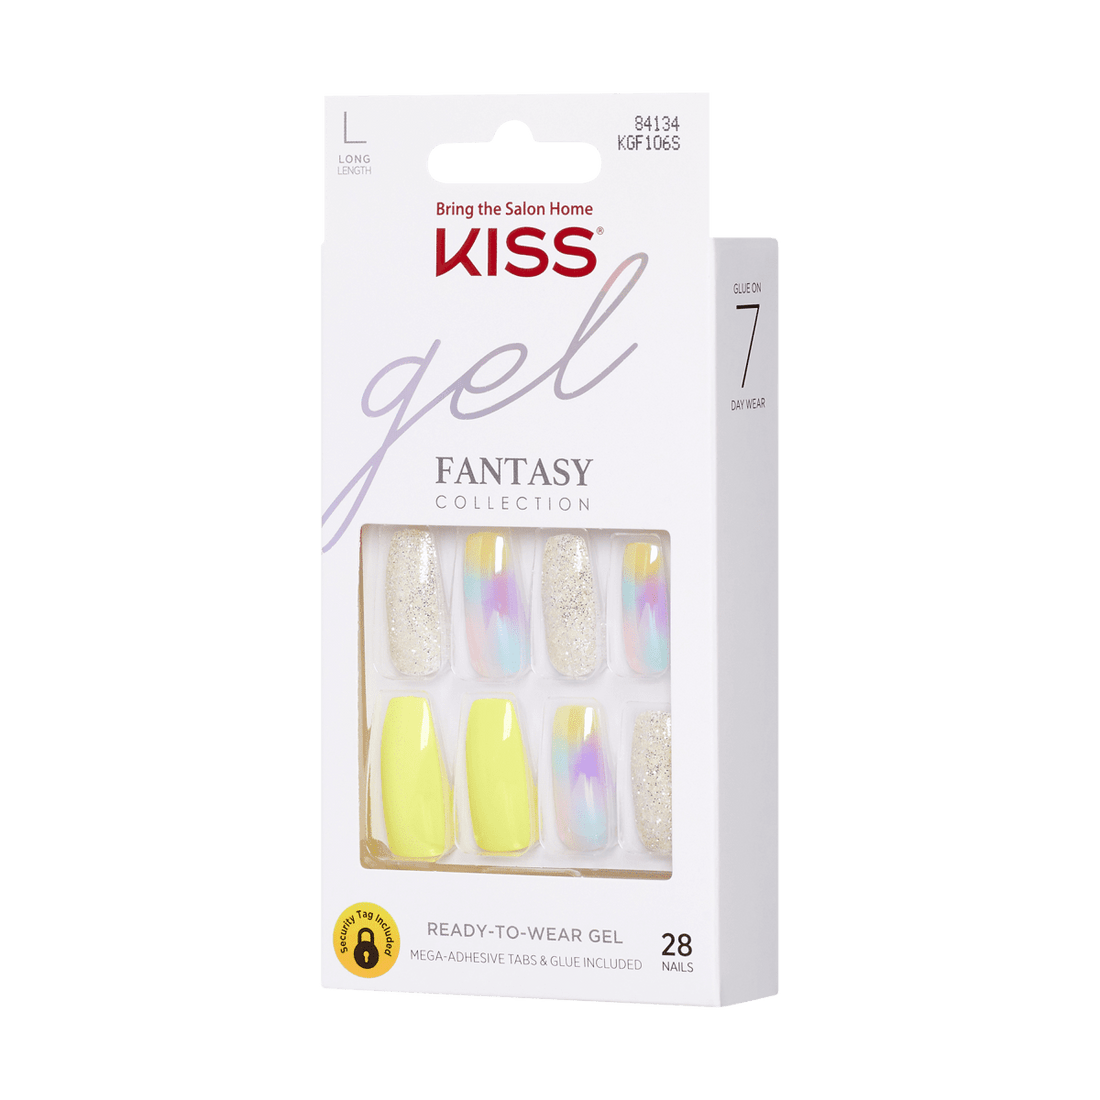 KISS Gel Fantasy Ready to Wear Gel Nails - In Your Eyes